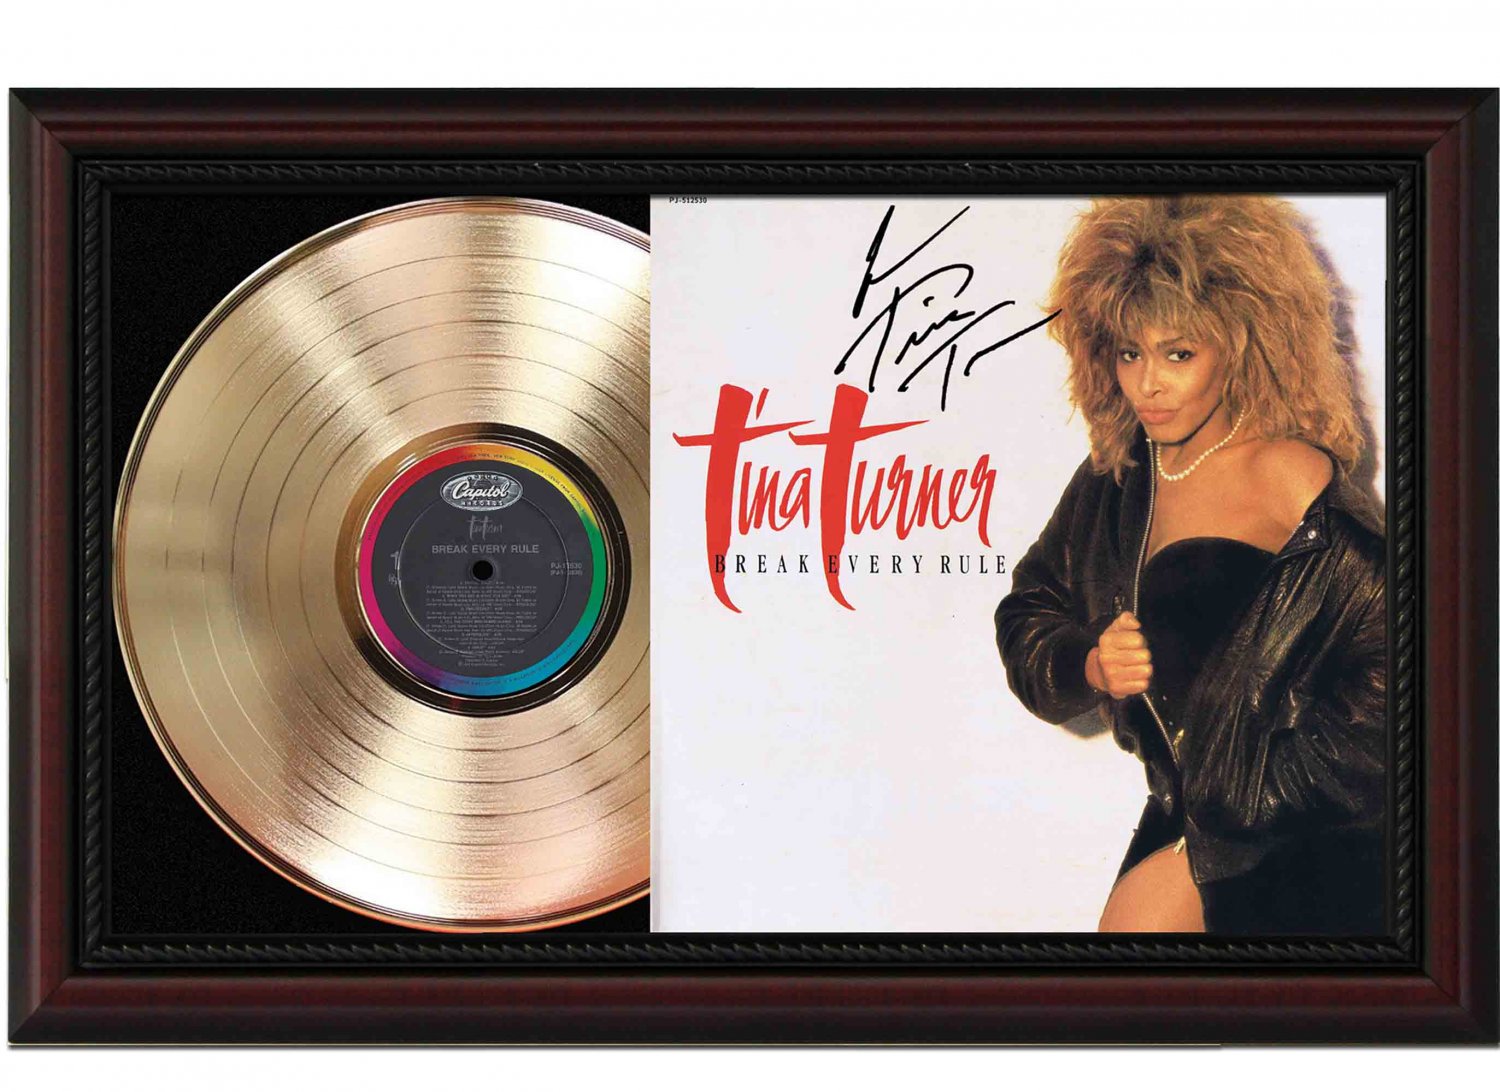 TINA TURNER "Break Every Rule" Framed Record Display.